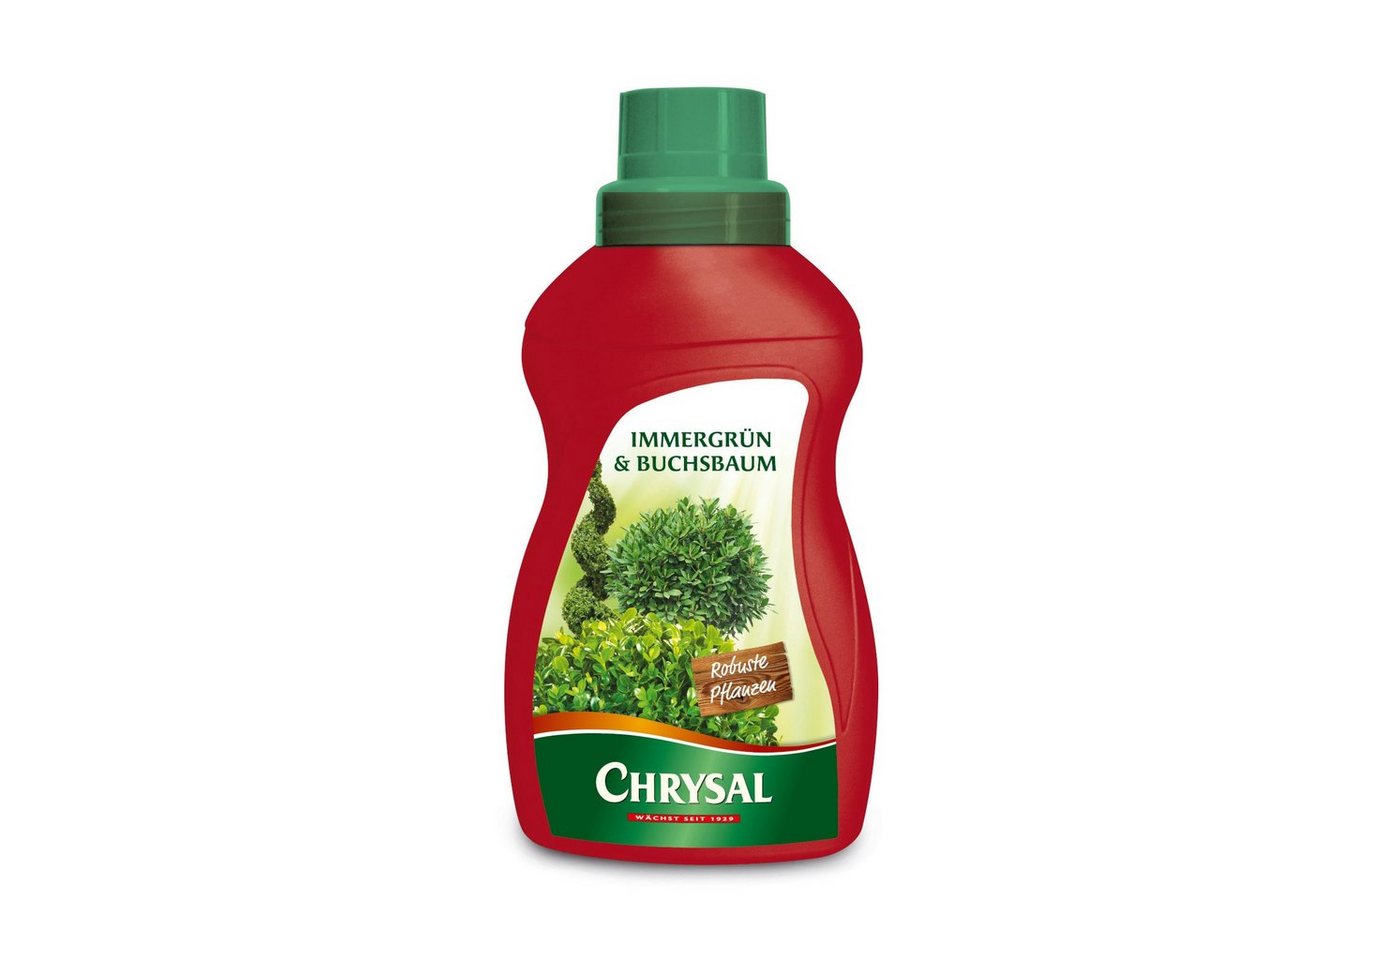 Chrysal Pflanzendünger Chrysal Immergrün & Buchsbaum Flüssigdünger - 500 ml von Chrysal